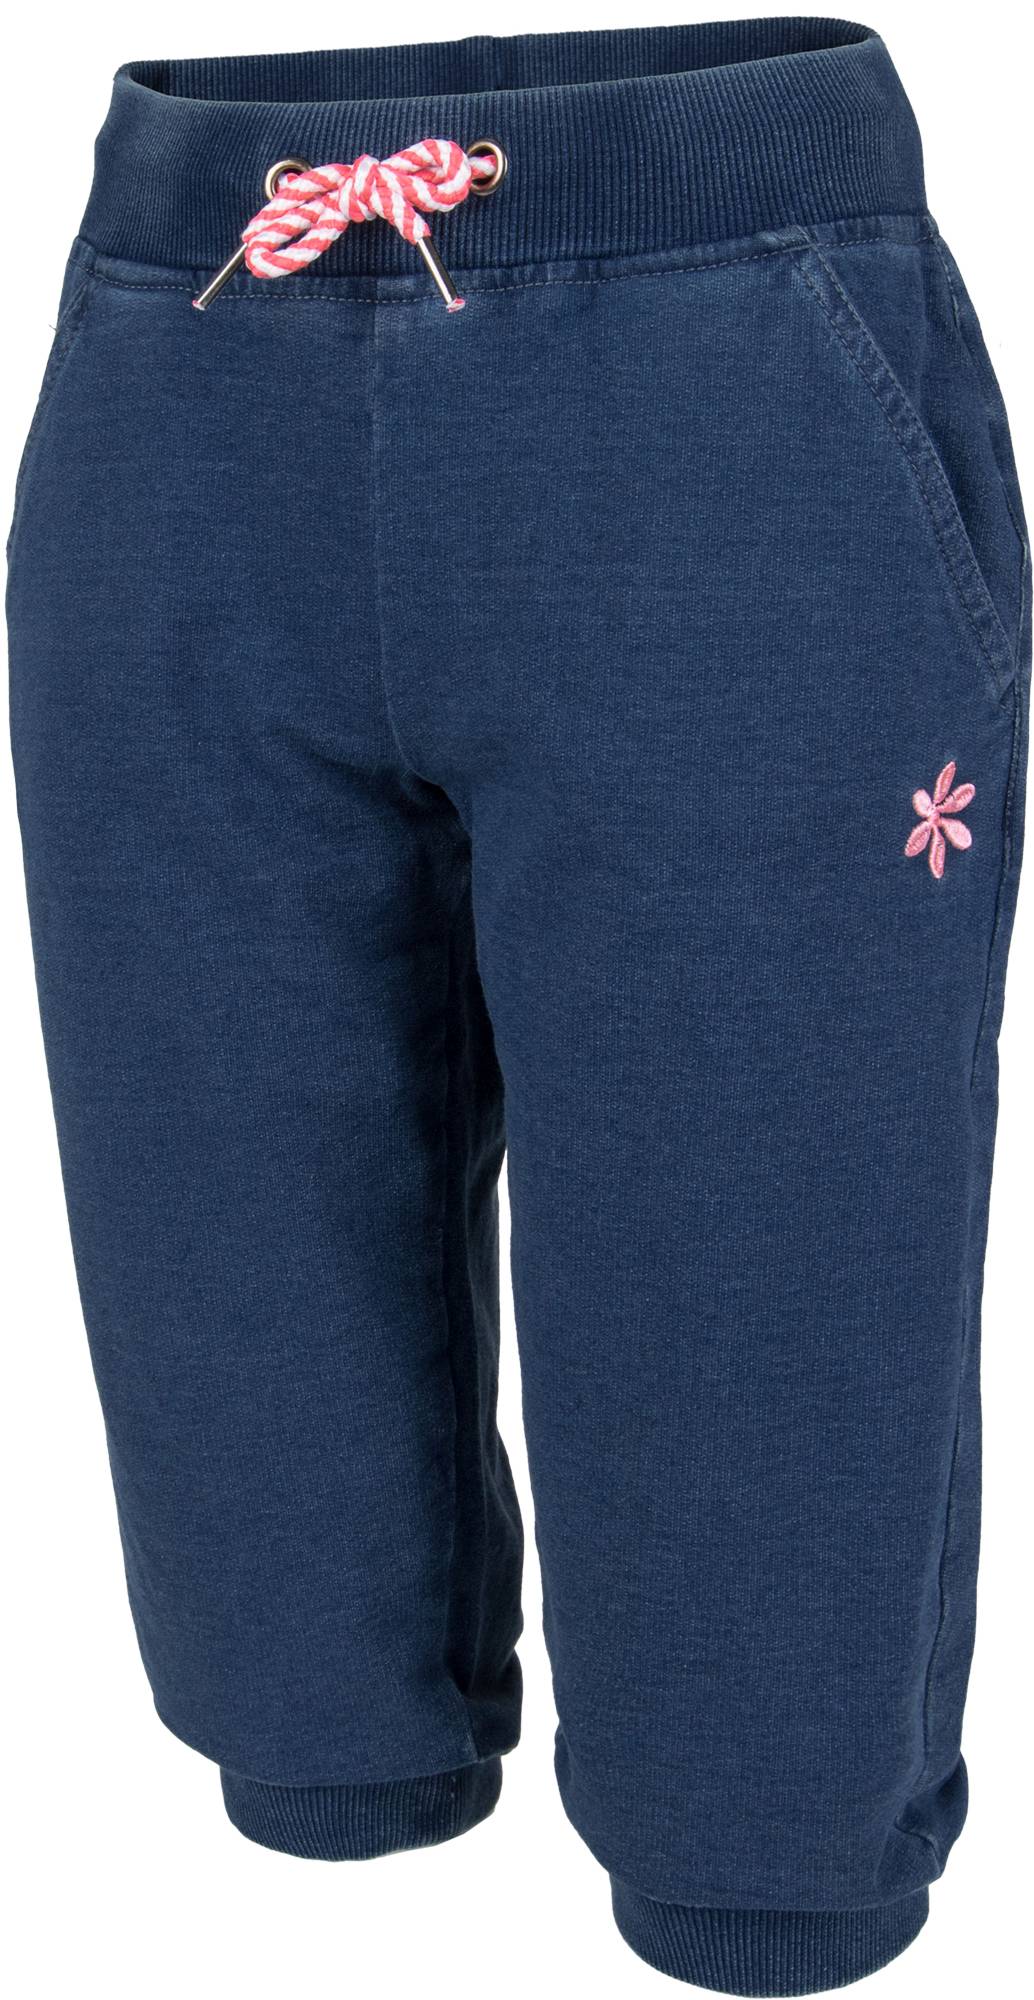 Girls’ three-quarter length pants